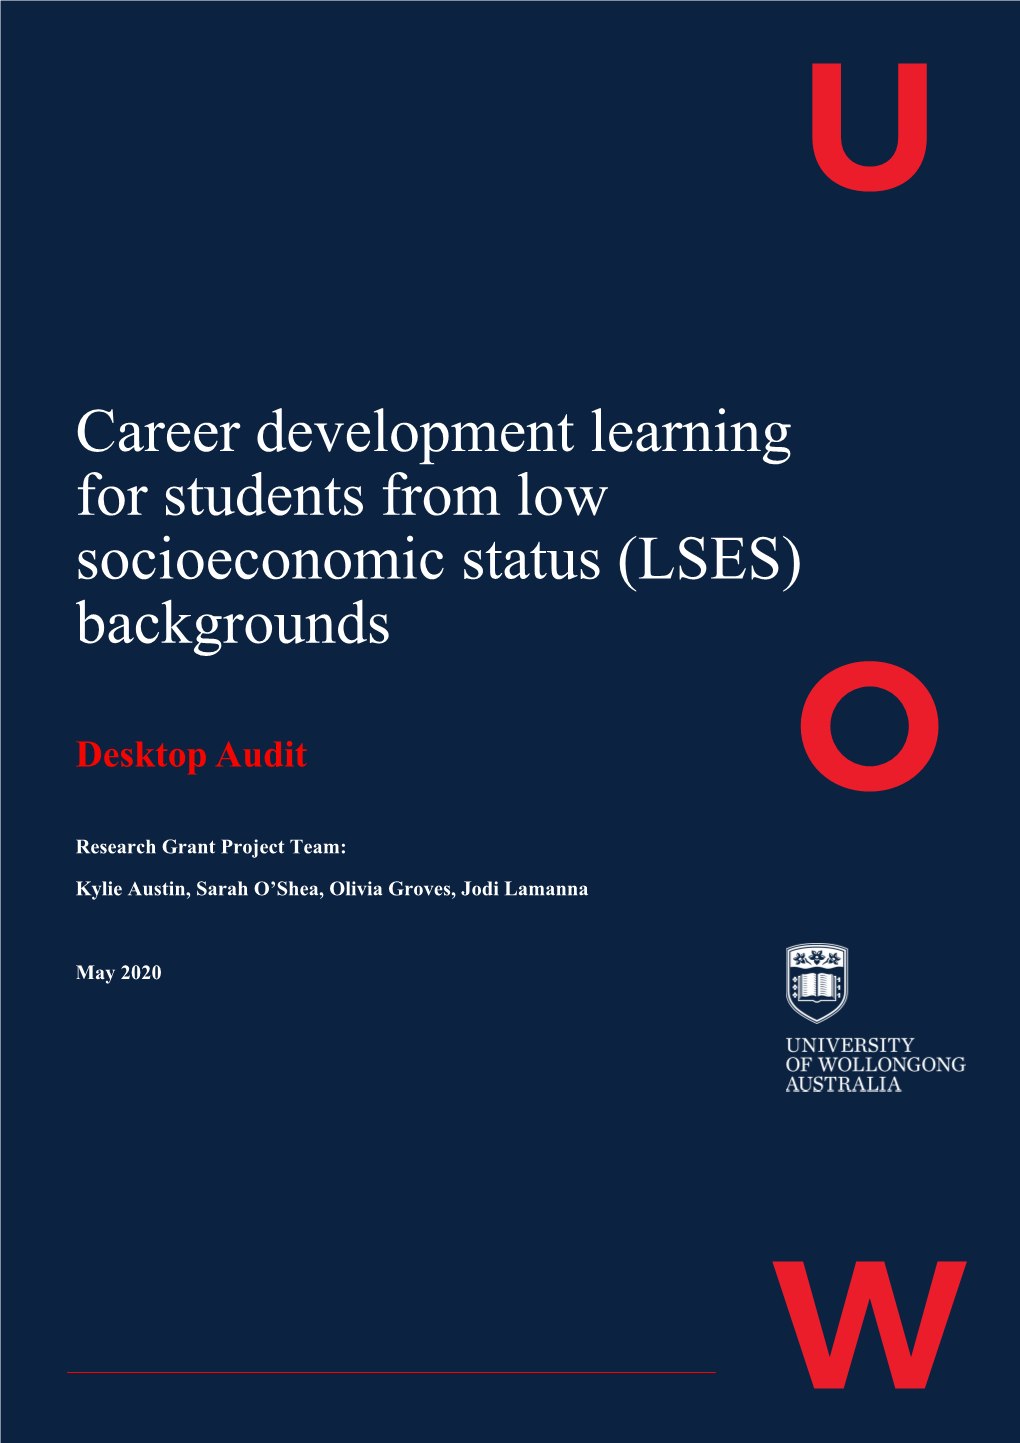 Career Development Learning for Students from Low Socioeconomic Backgrounds: Desktop Audit